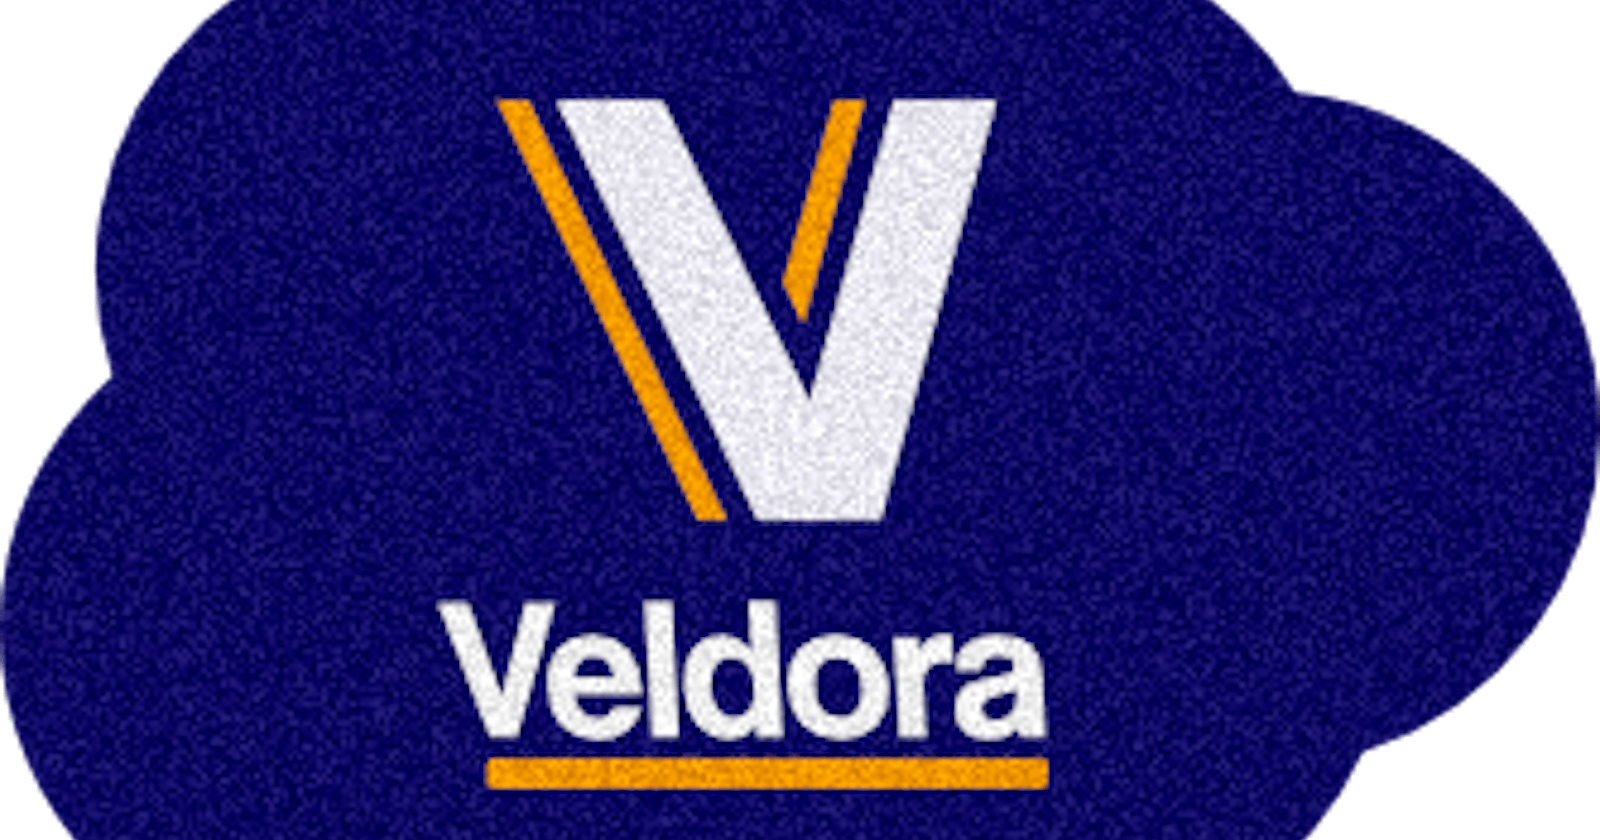 Veldora ⚡⚡⚡: Handling contact forms made easy